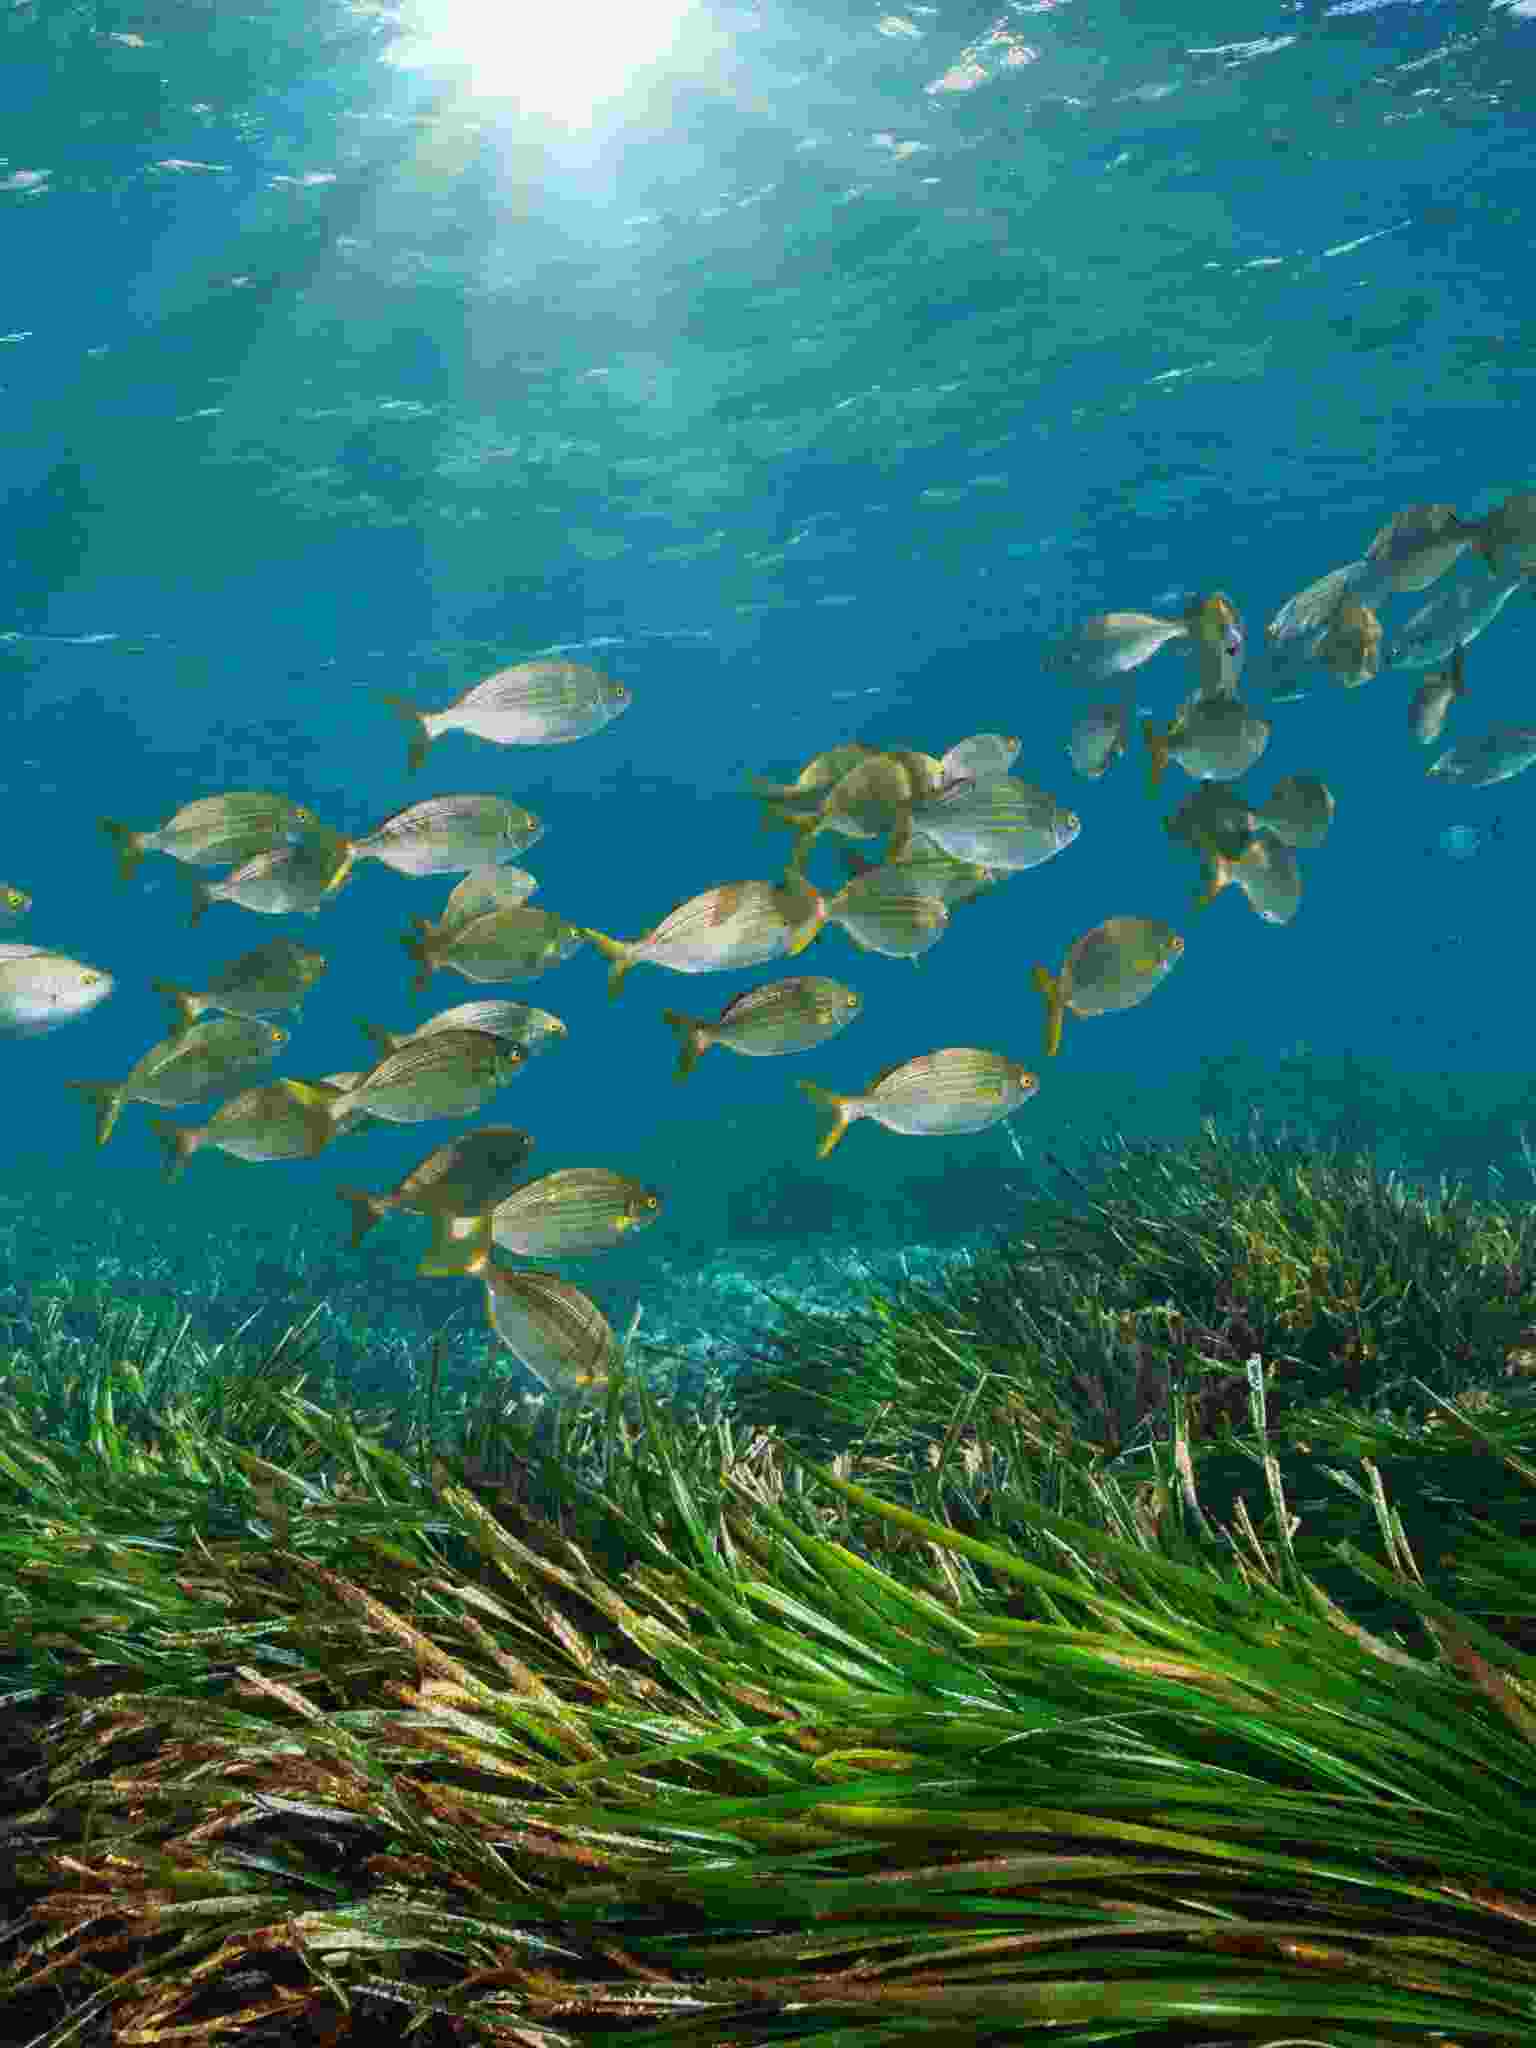 Fish and sea grass